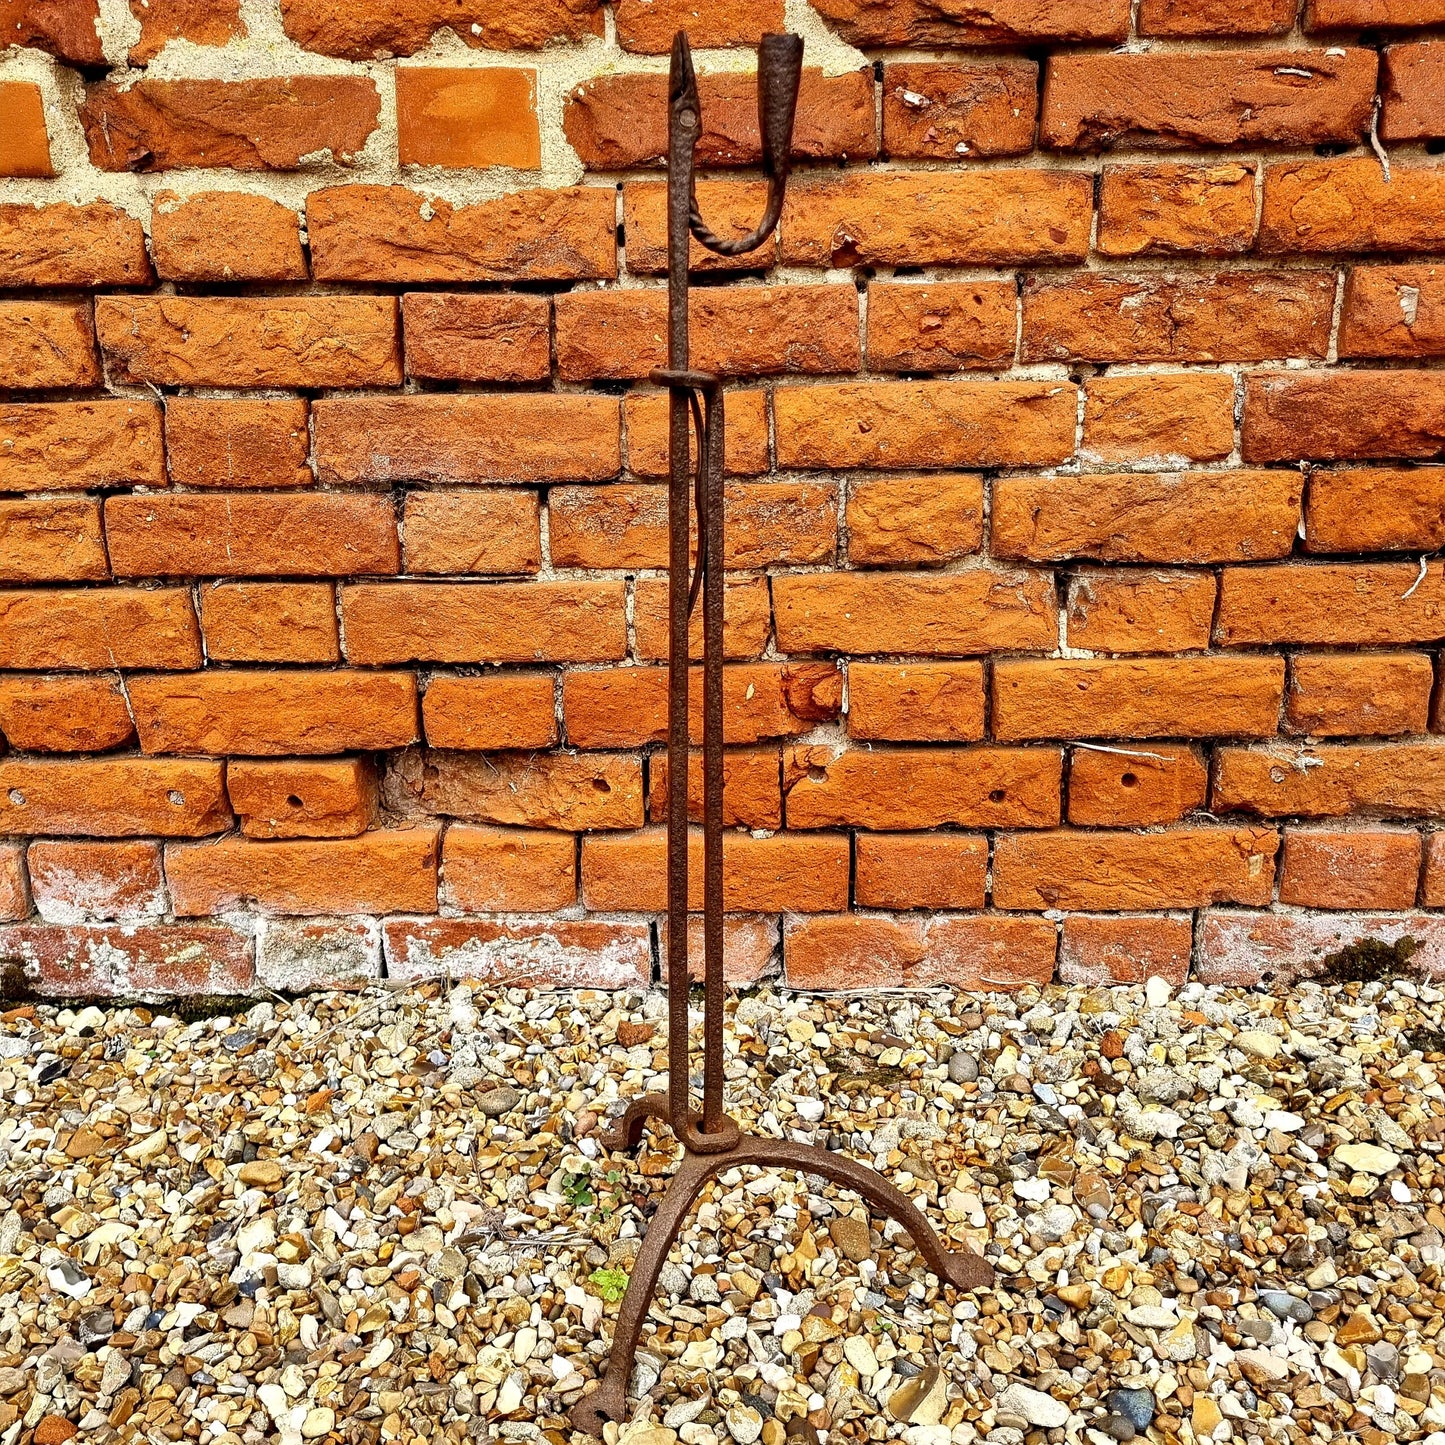 Early 18th Century Irish Antique Wrought Iron Corner Standard Rushlight or rushnip With Candleholder